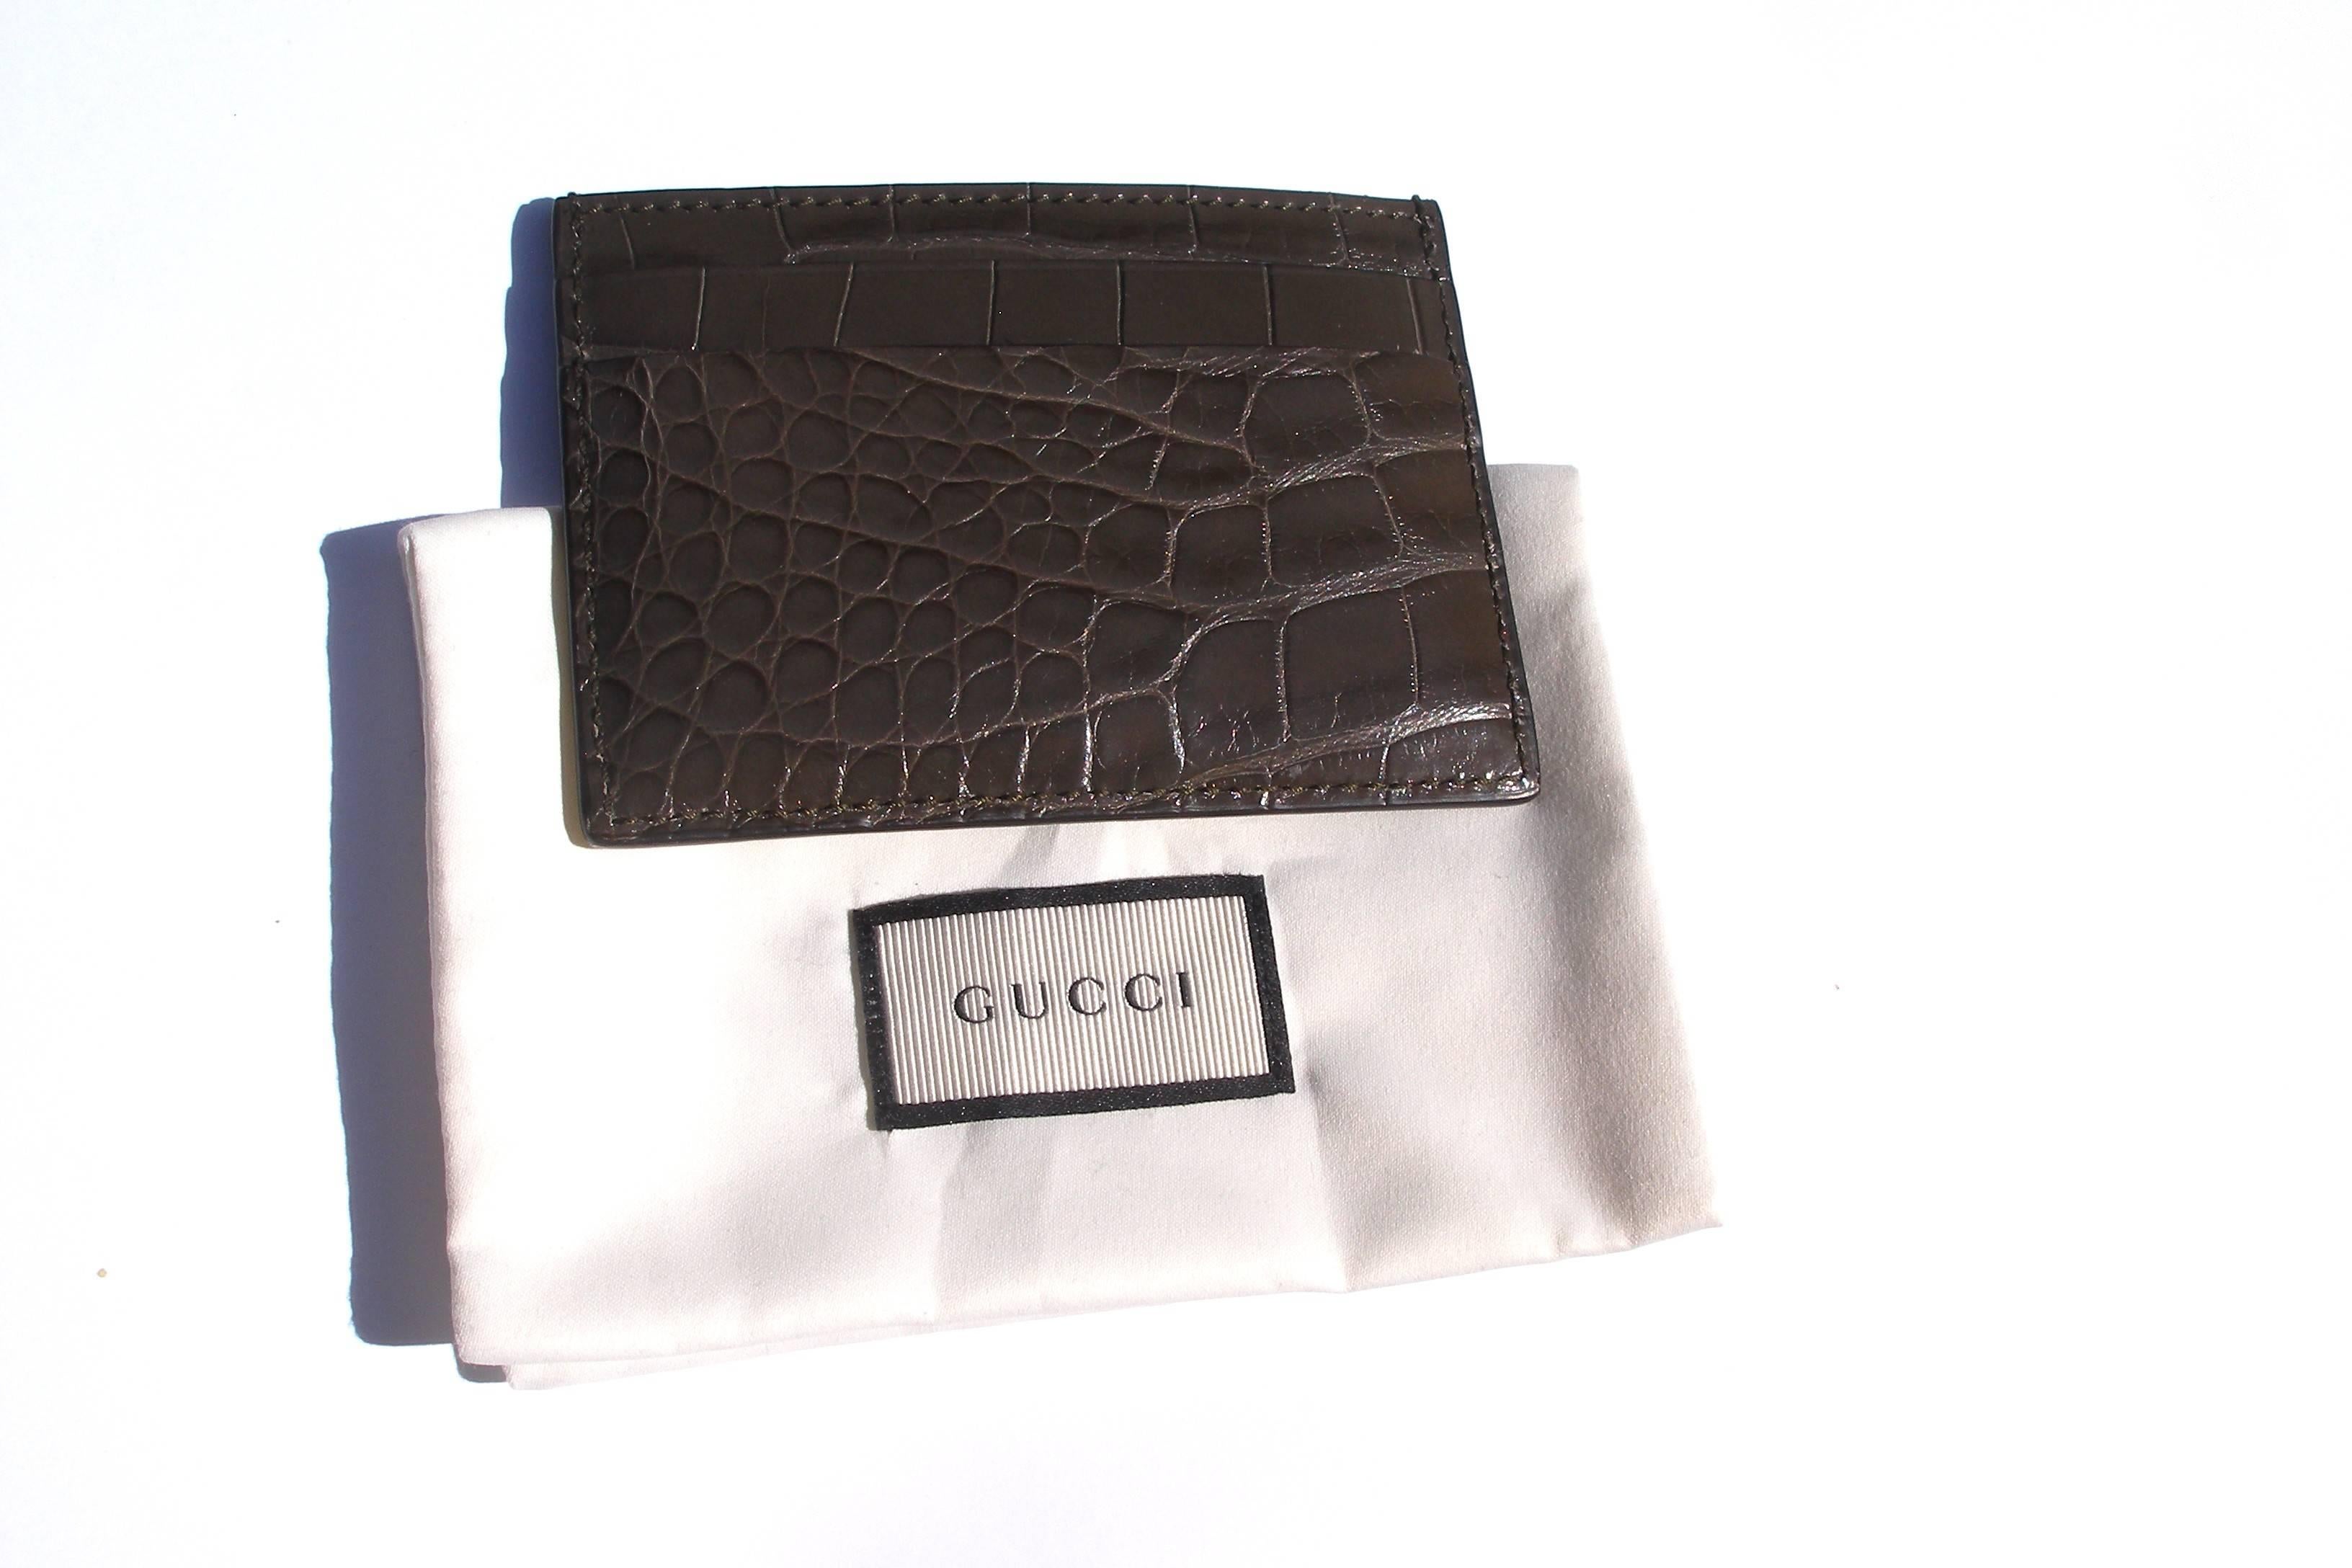  GUCCI Crocodile Card Case Millémiun color Rétail Price $ 820 / BRAND NEW 3